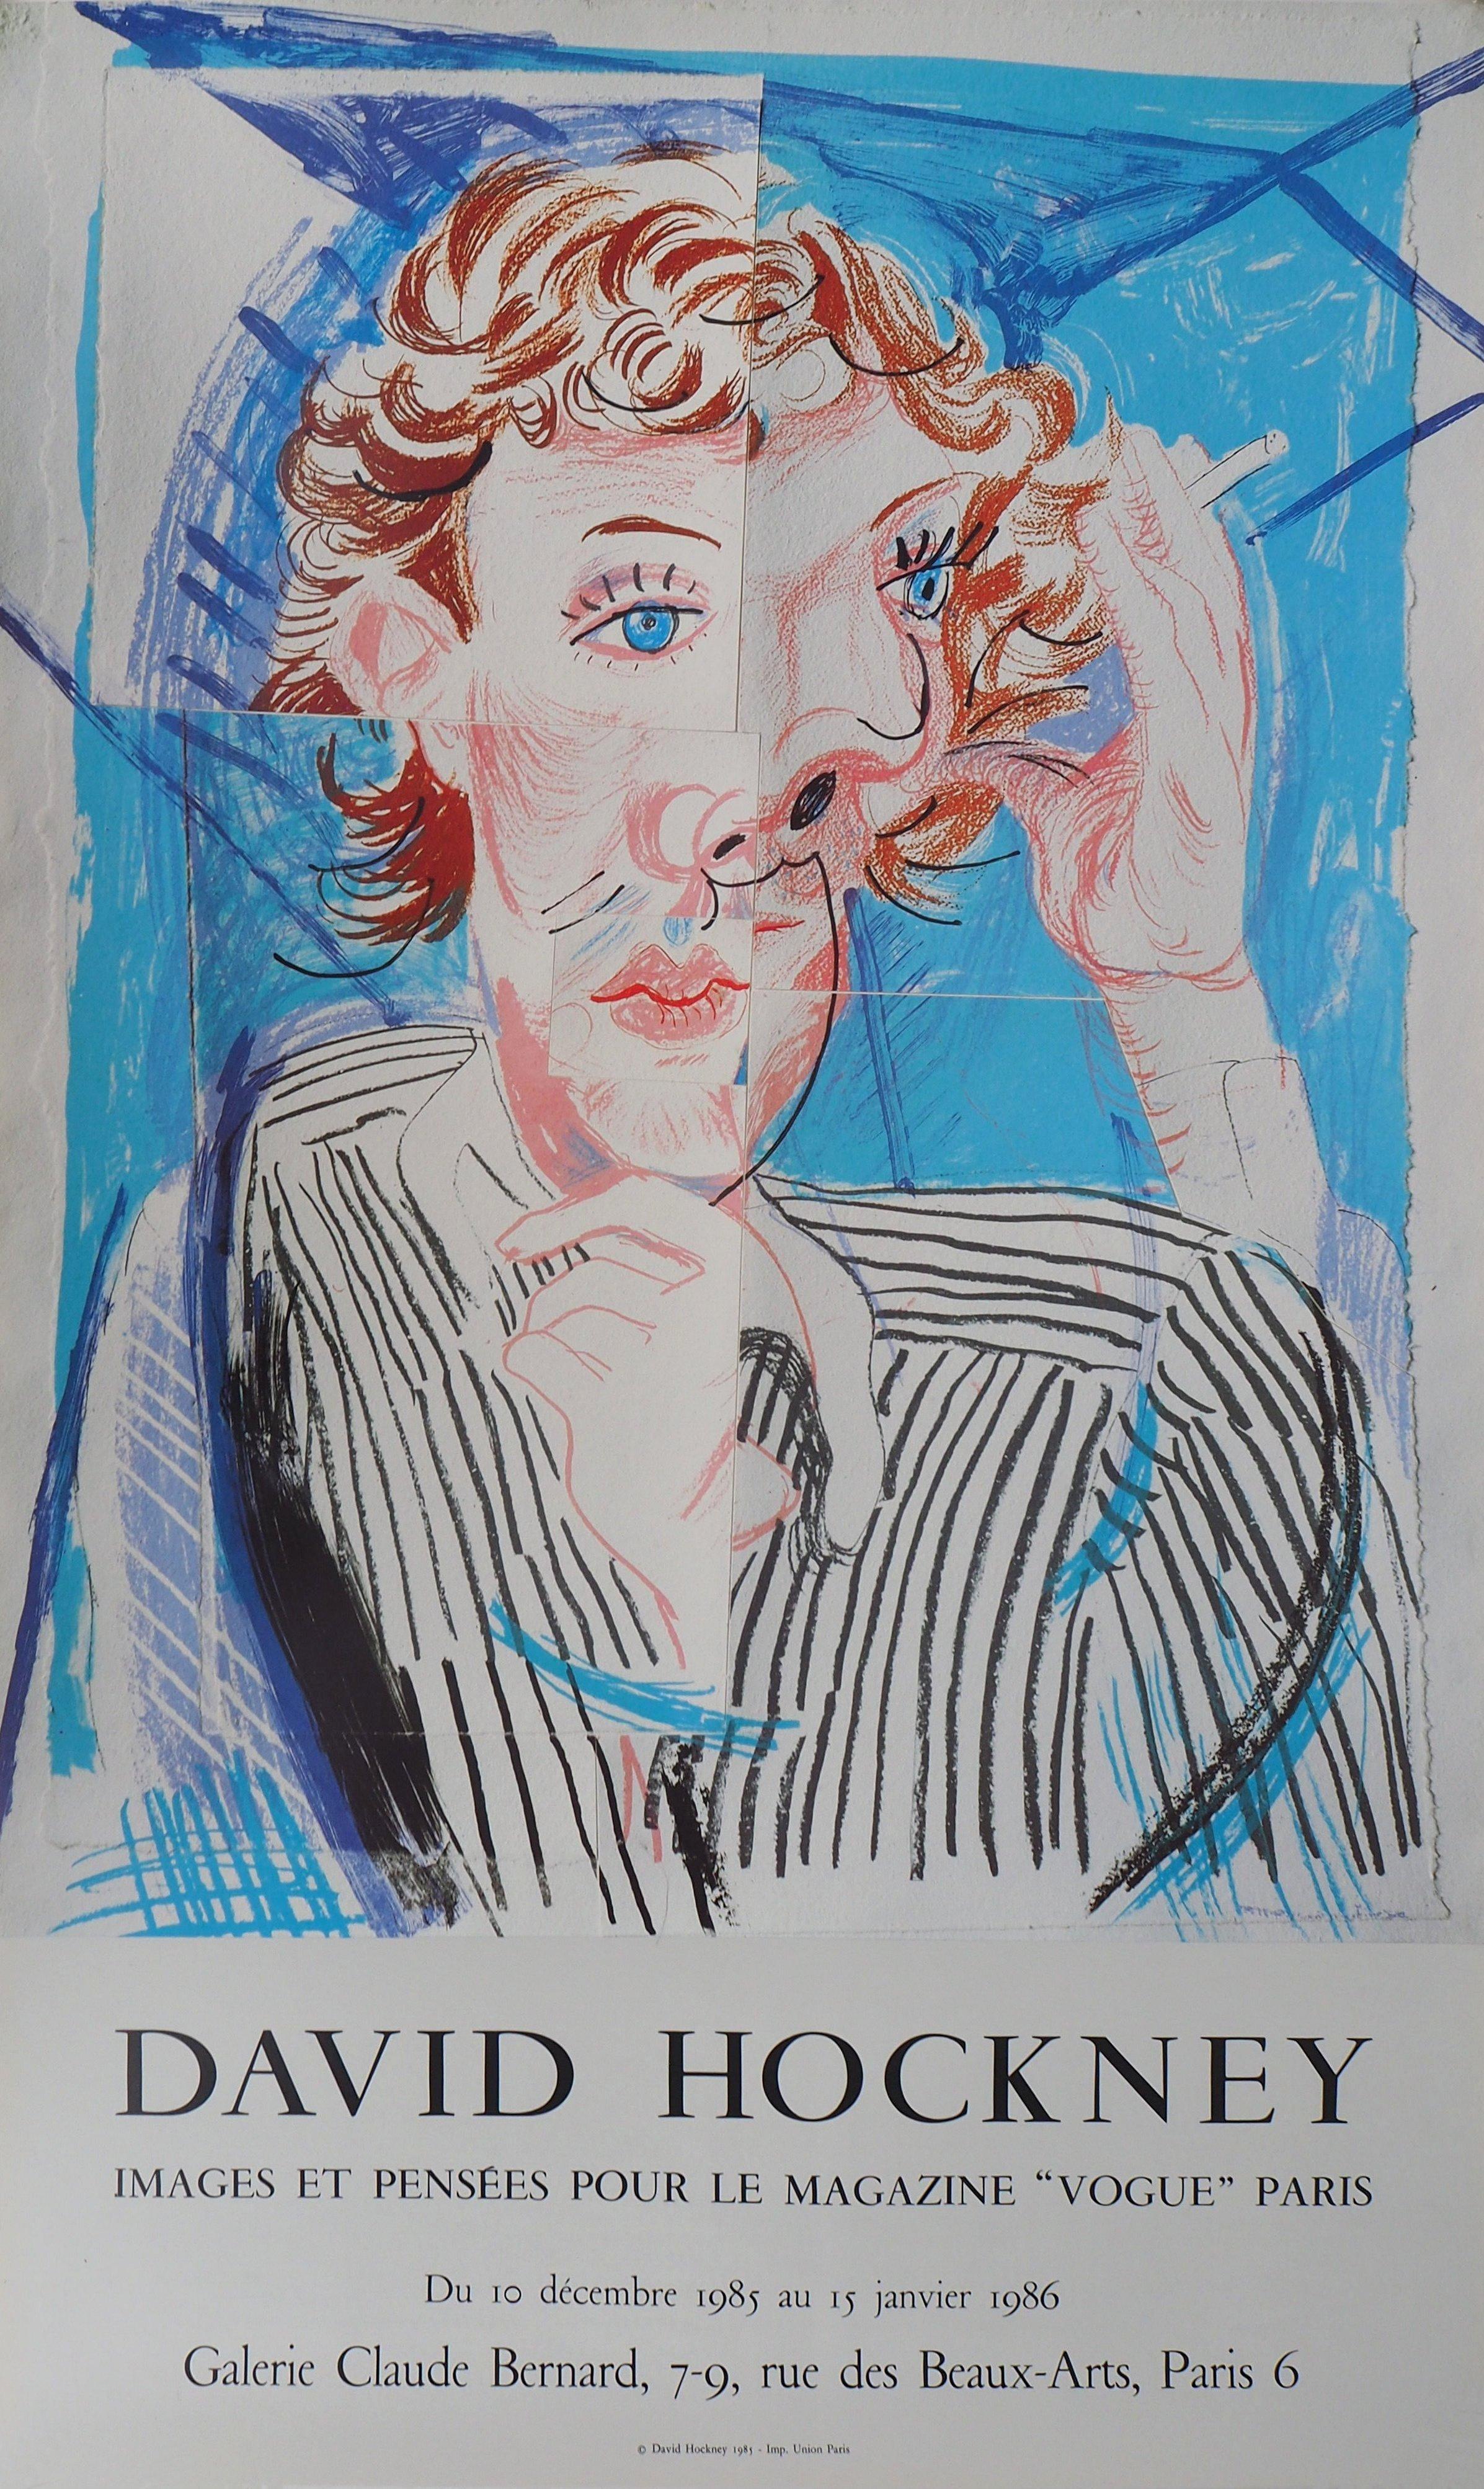 (after) David Hockney Portrait Print - Cubist Portrait : Vogue - Original Vintage Poster (1985)